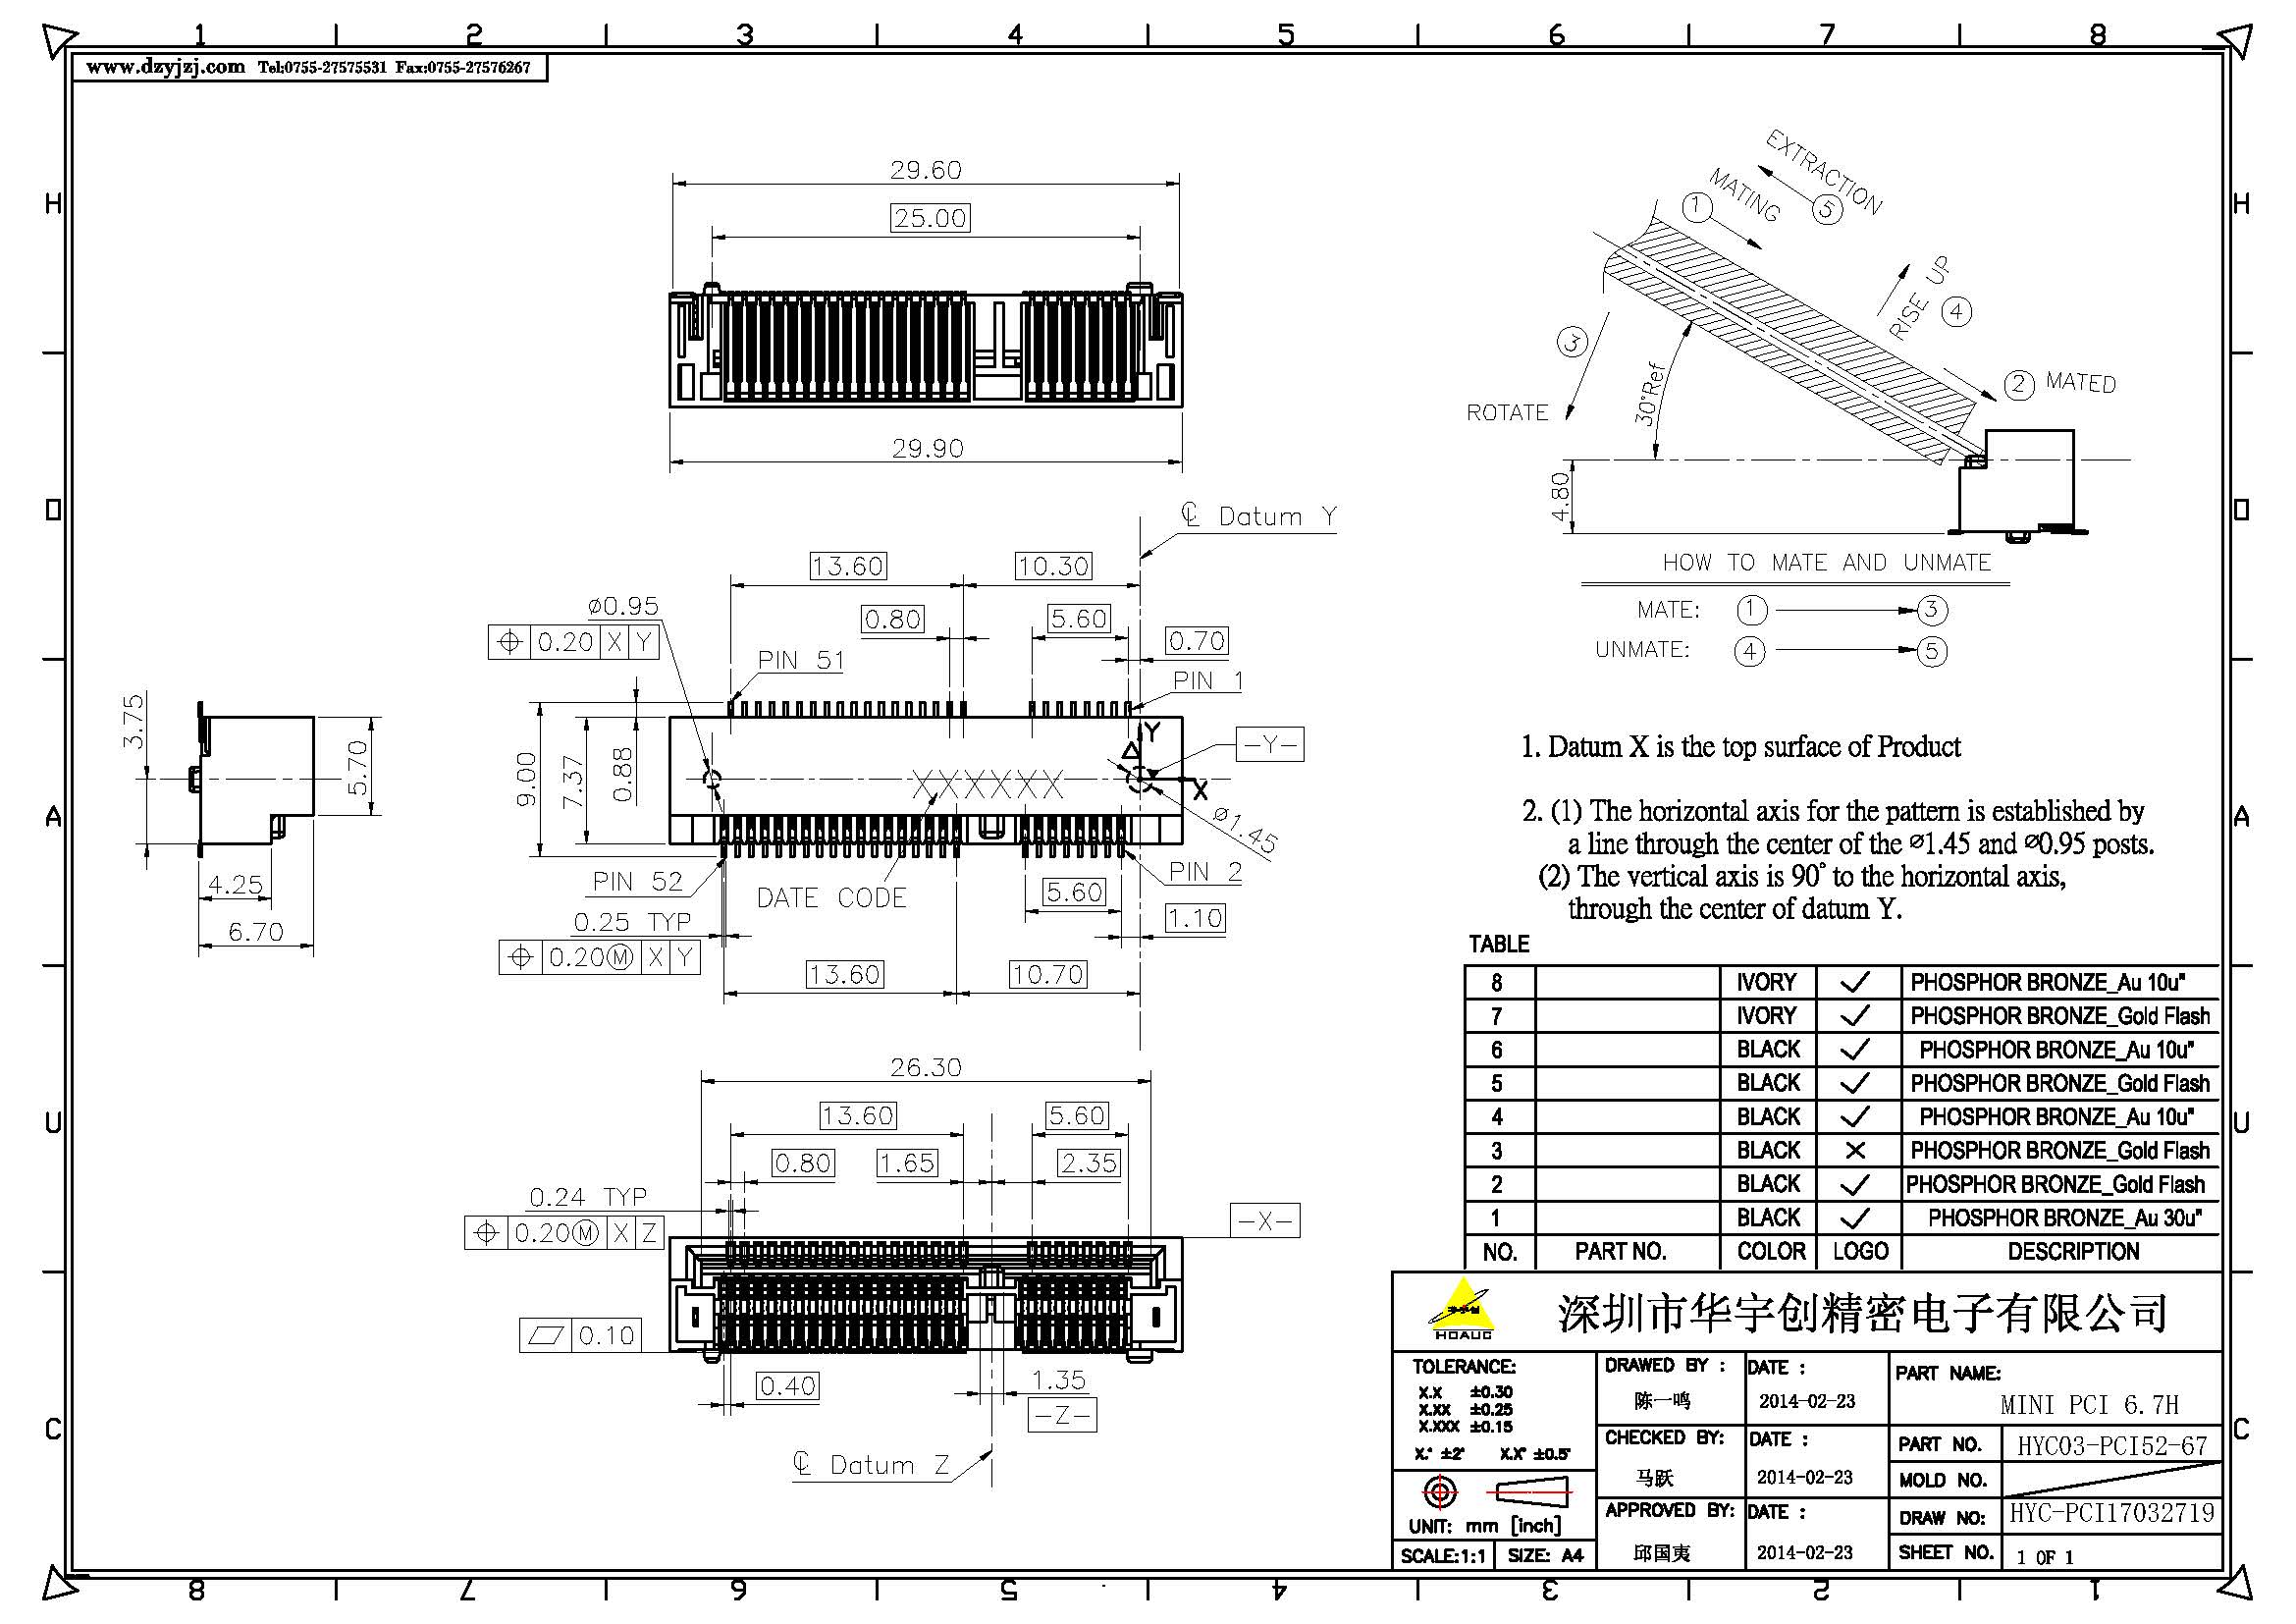 MINI PCI 6.7H产品图_页面_1.jpg